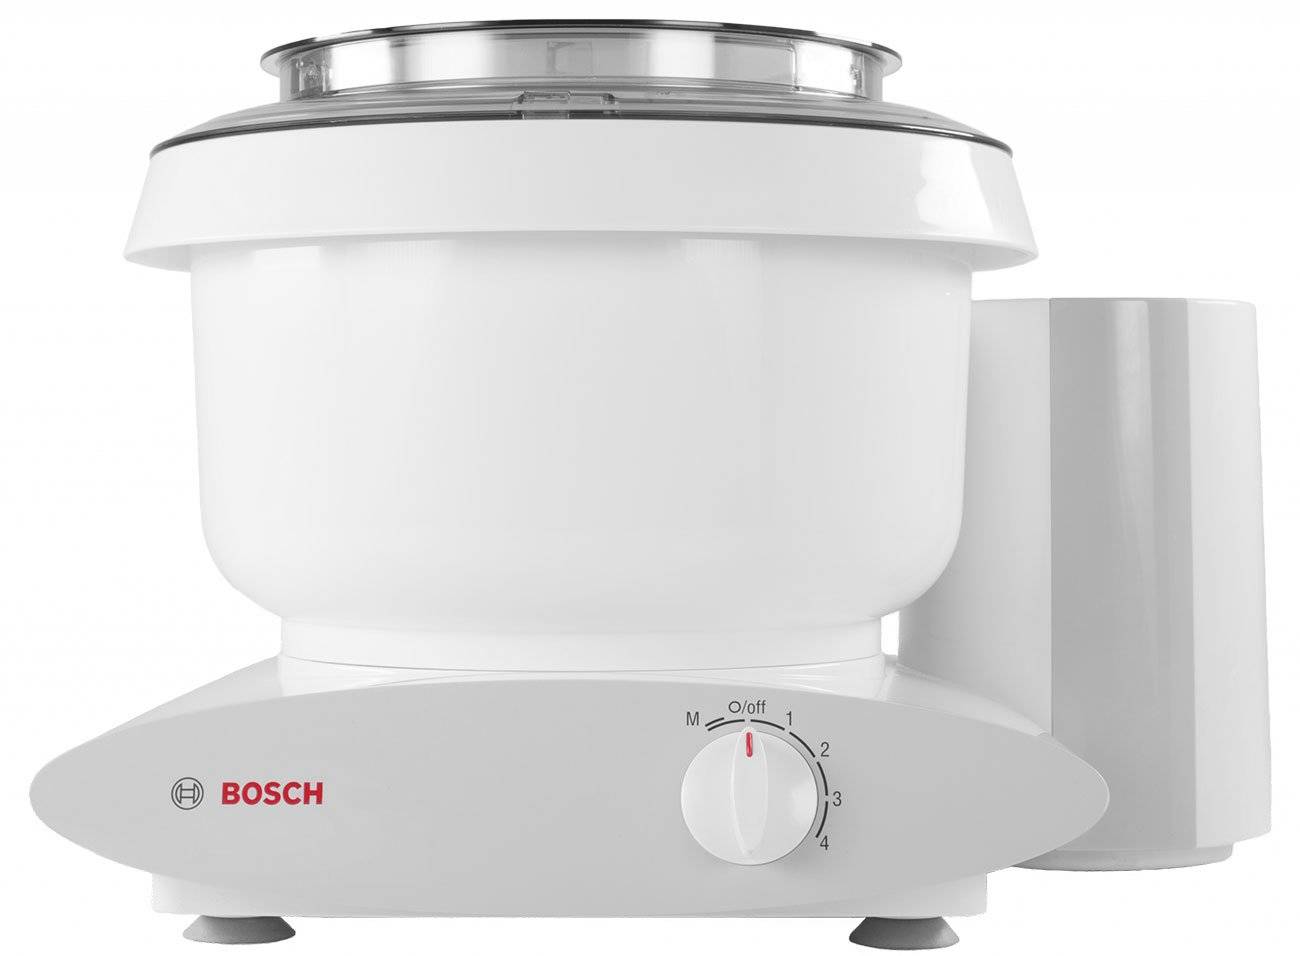 Bosch Stand Mixers